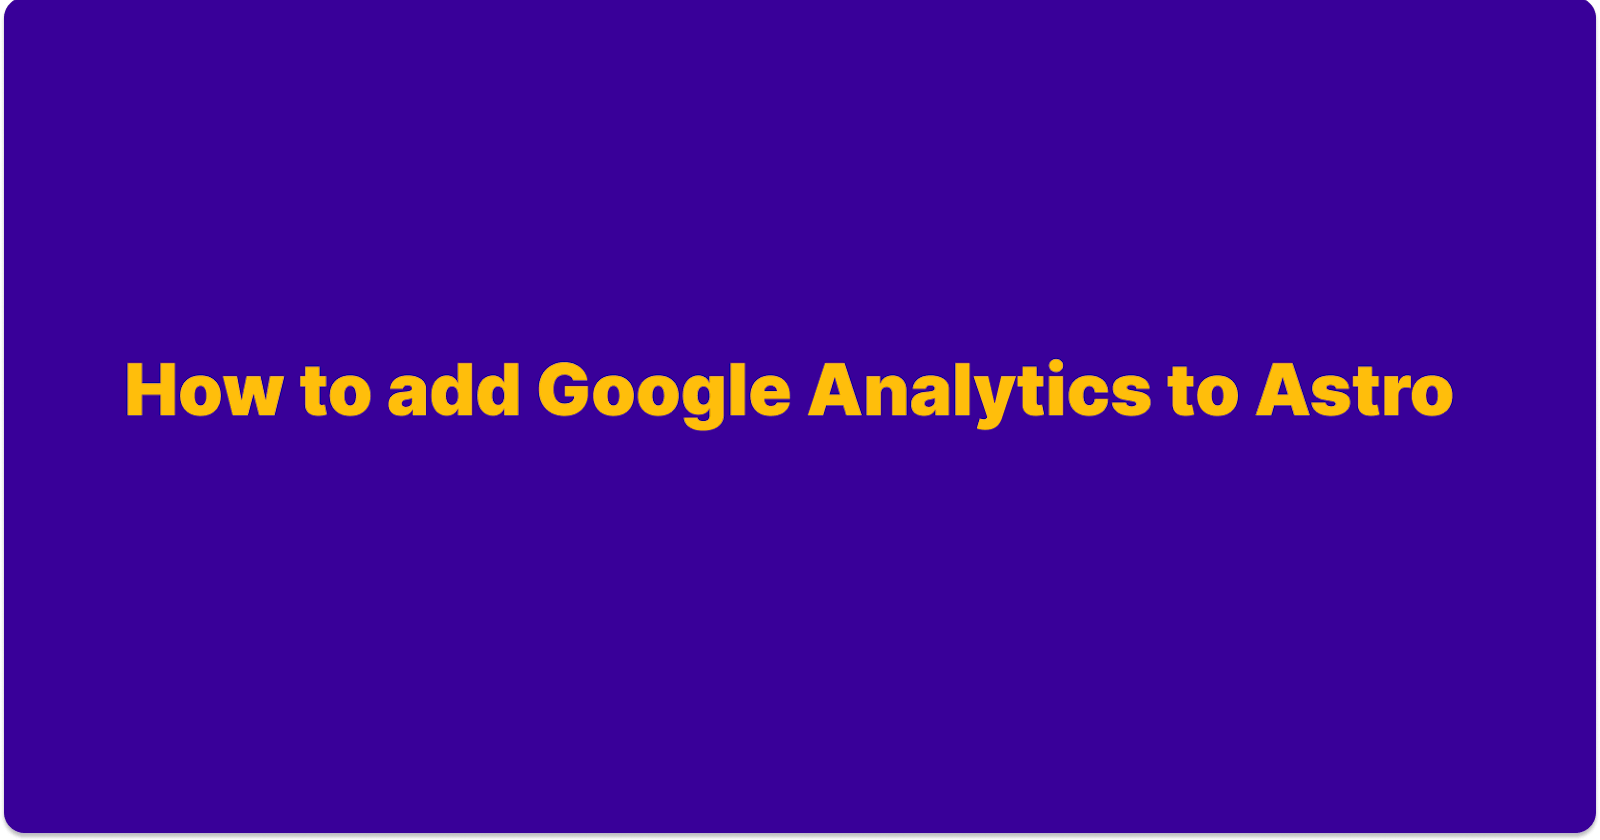 How to add Google Analytics to Astro